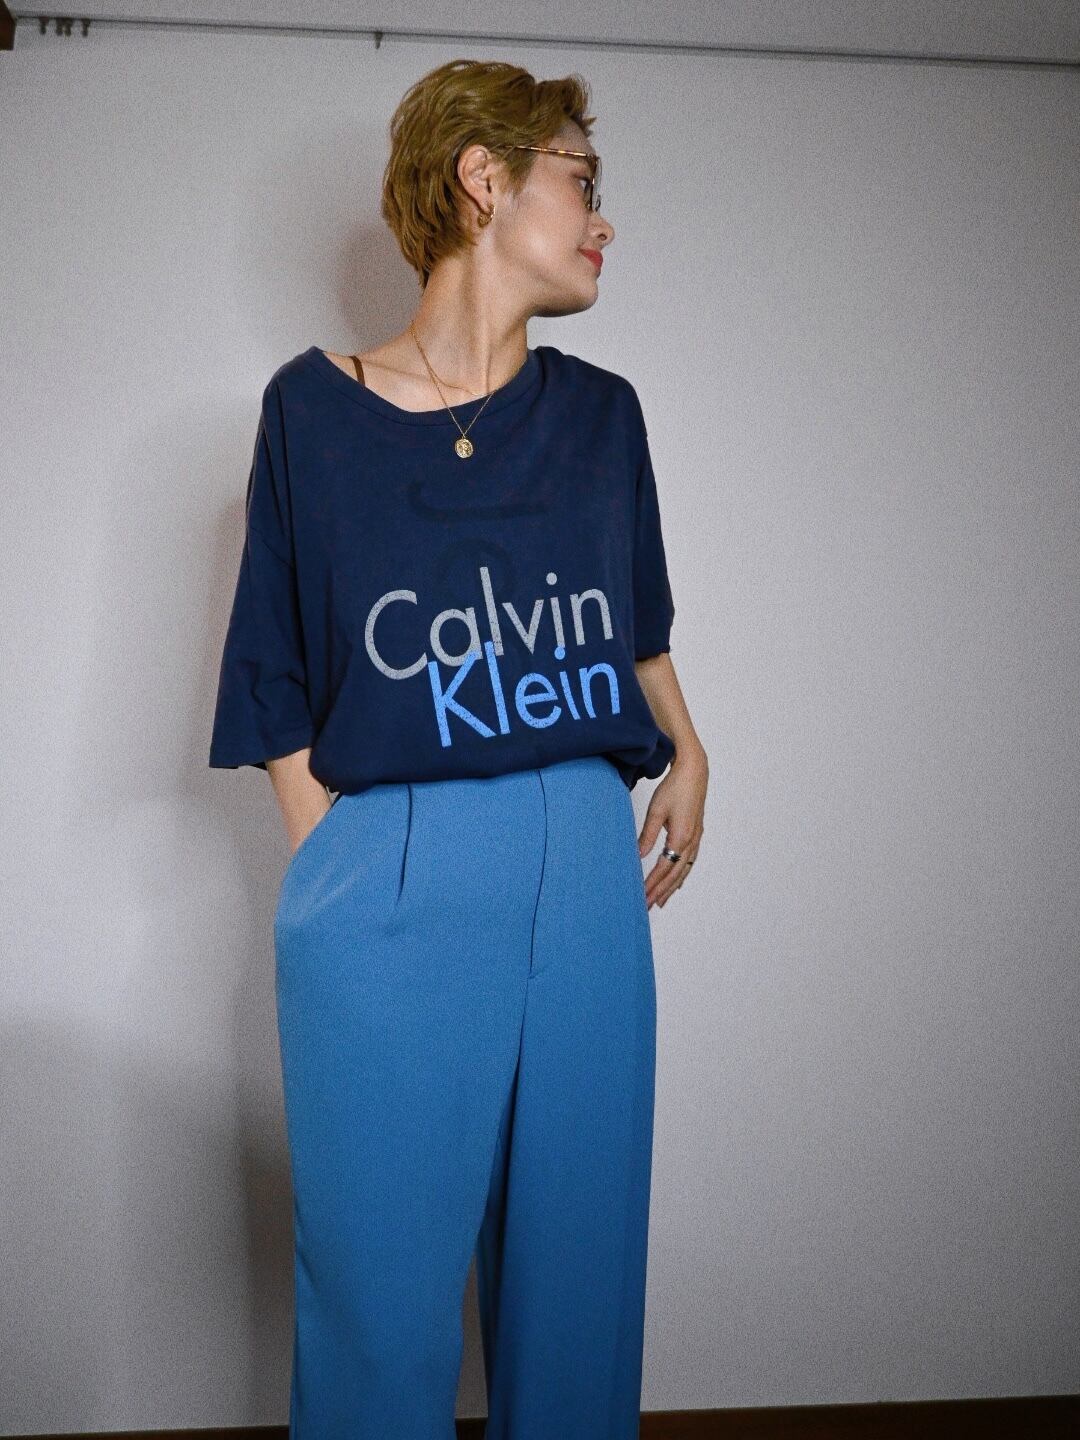 （CS594）Calvin Klein logo T-shirt made in USA